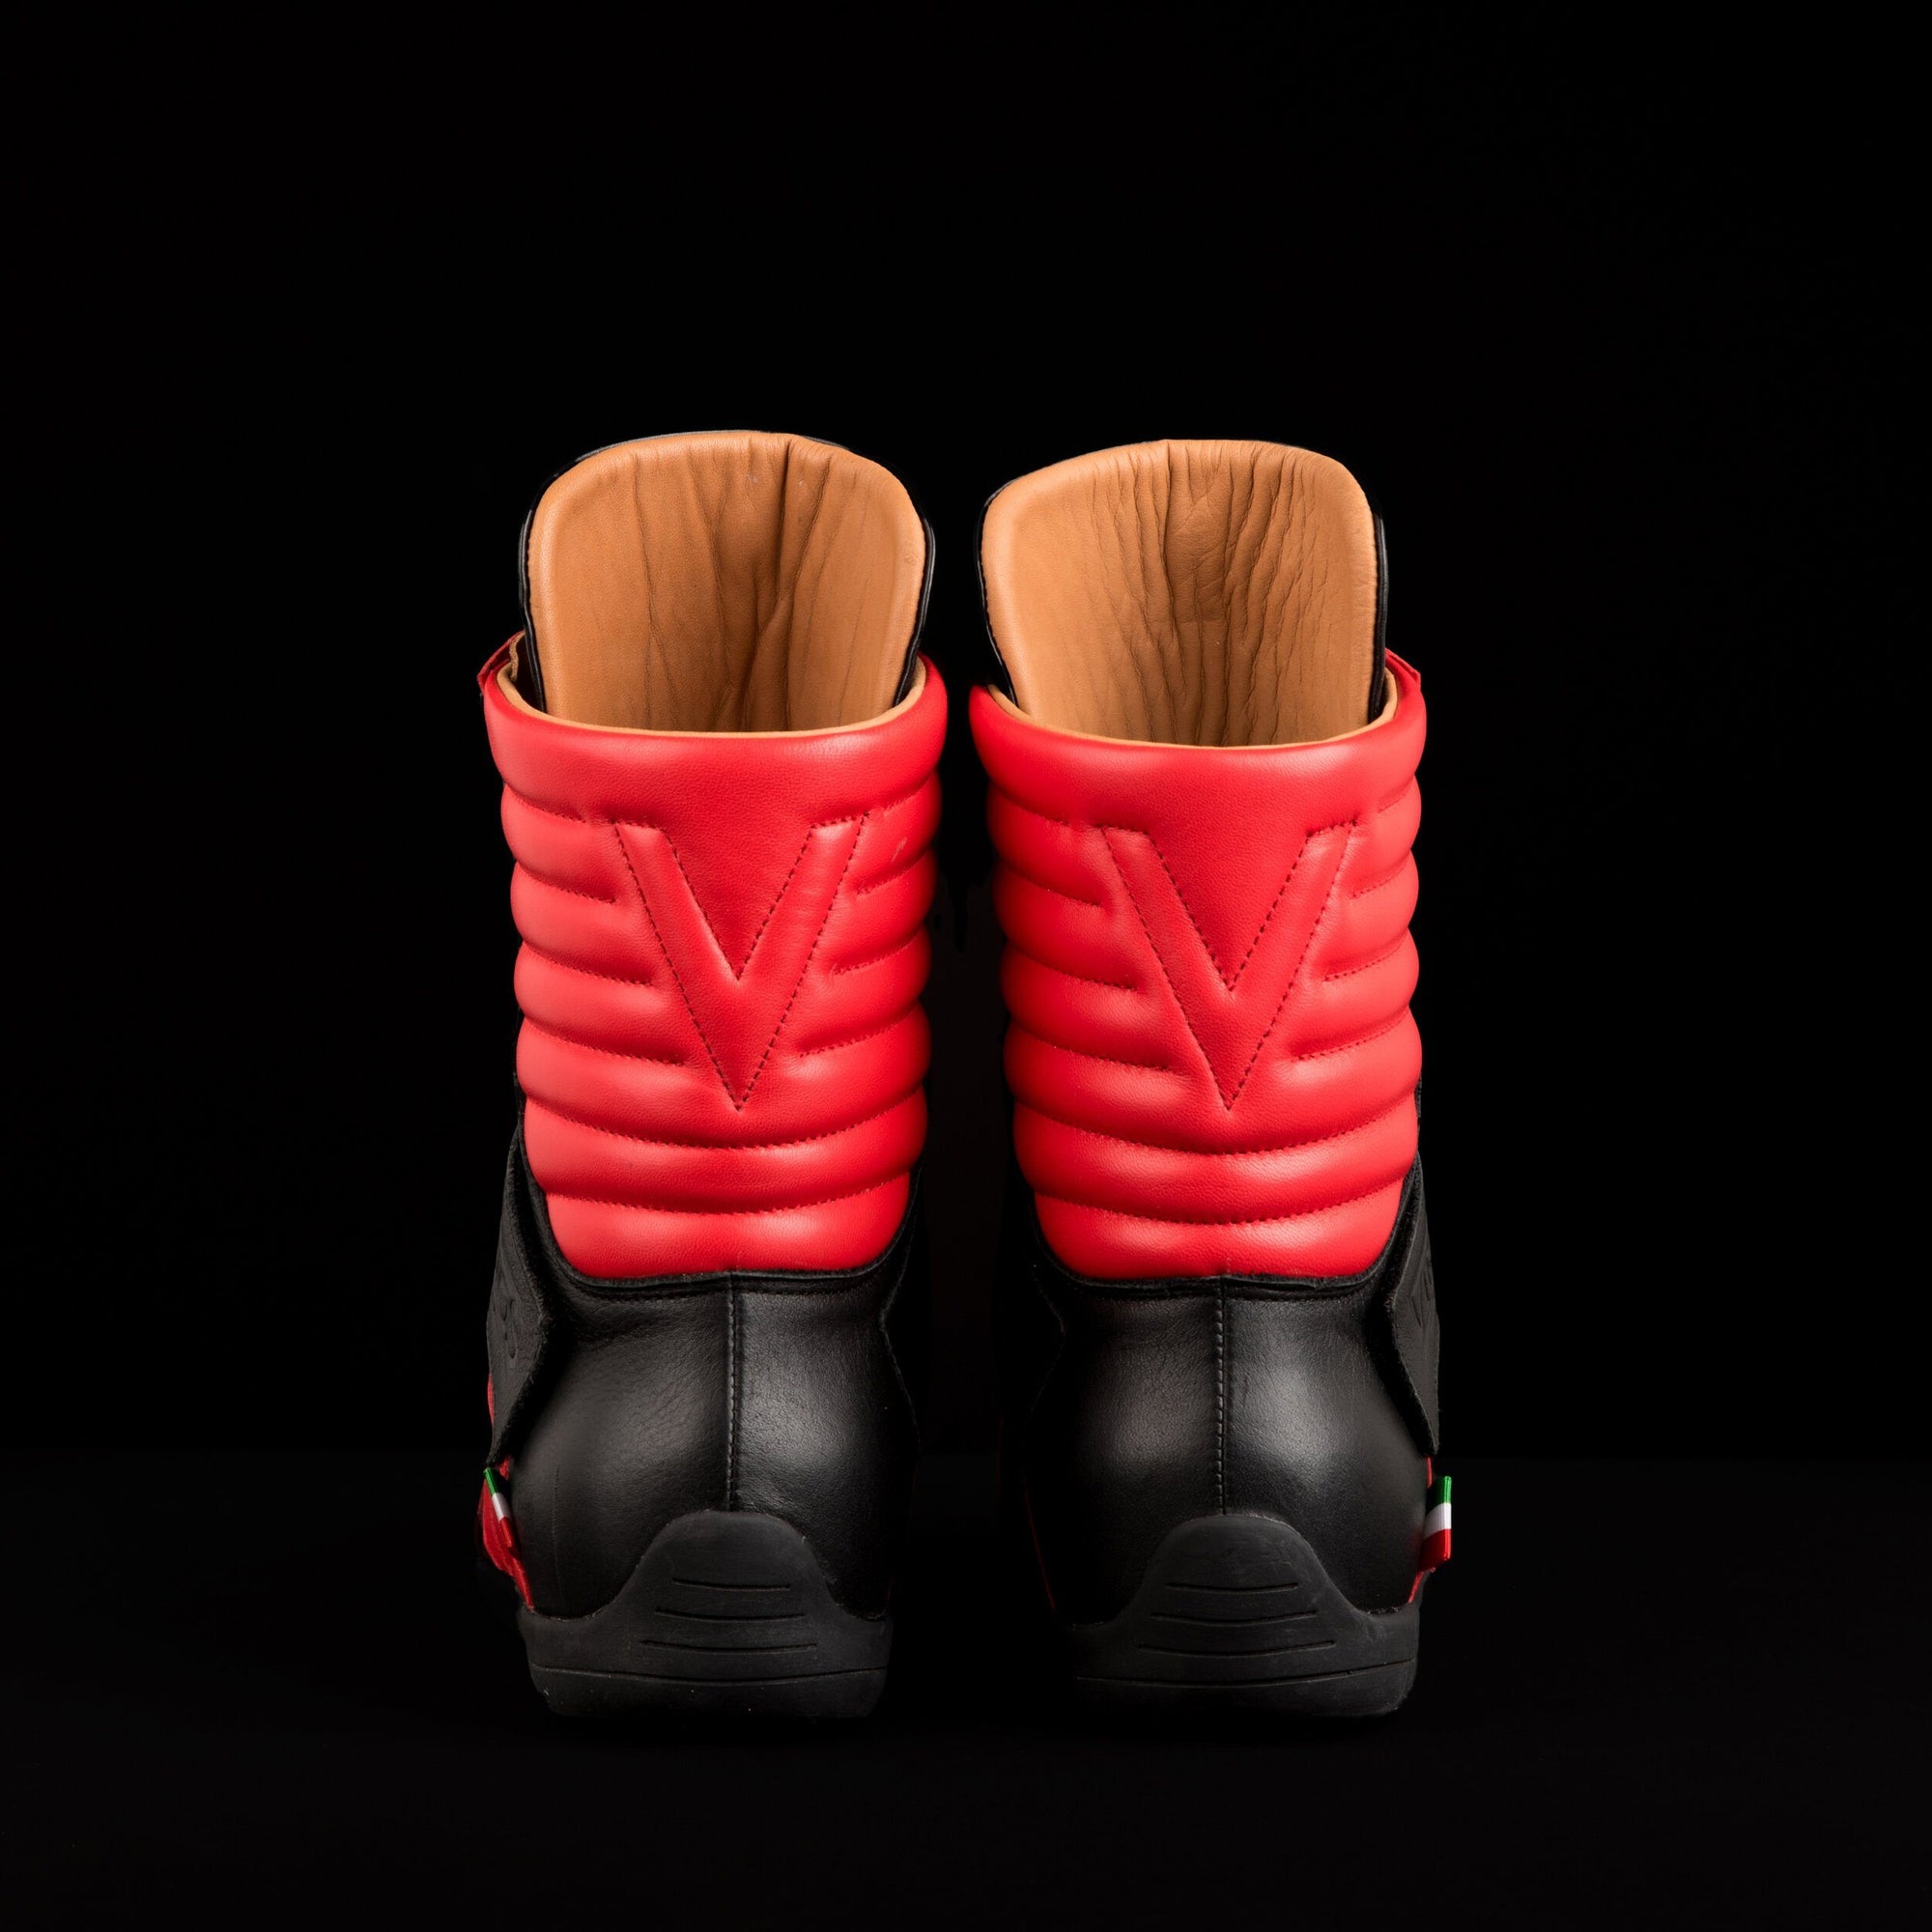 Designer Black High Top Boxing Shoes Free Shipping USA